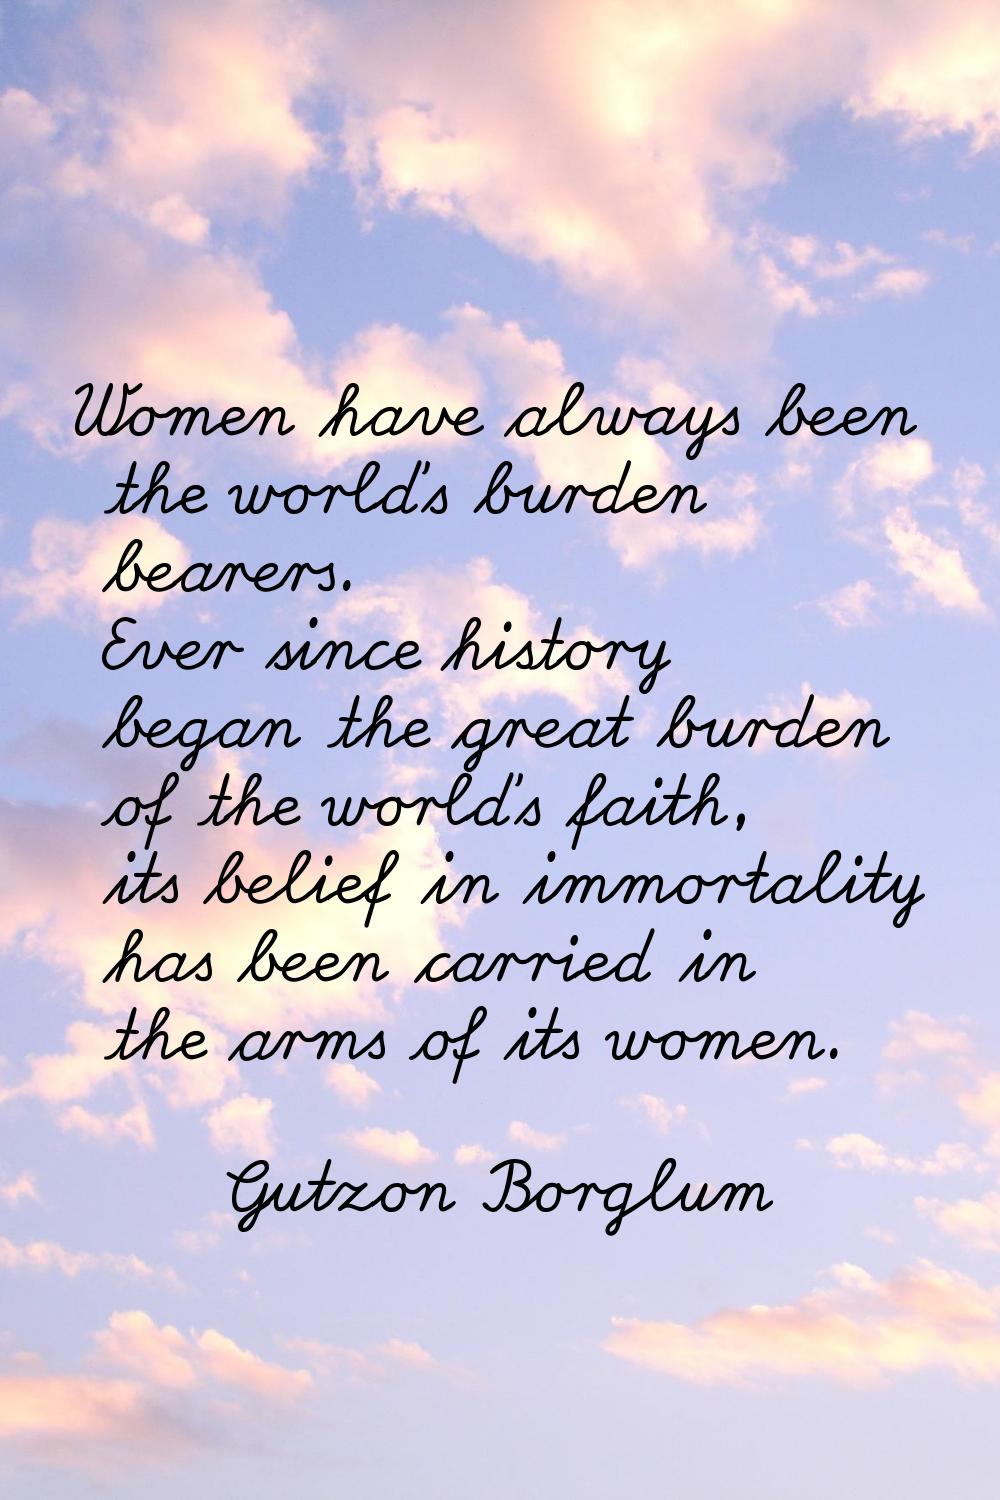 Women have always been the world's burden bearers. Ever since history began the great burden of the